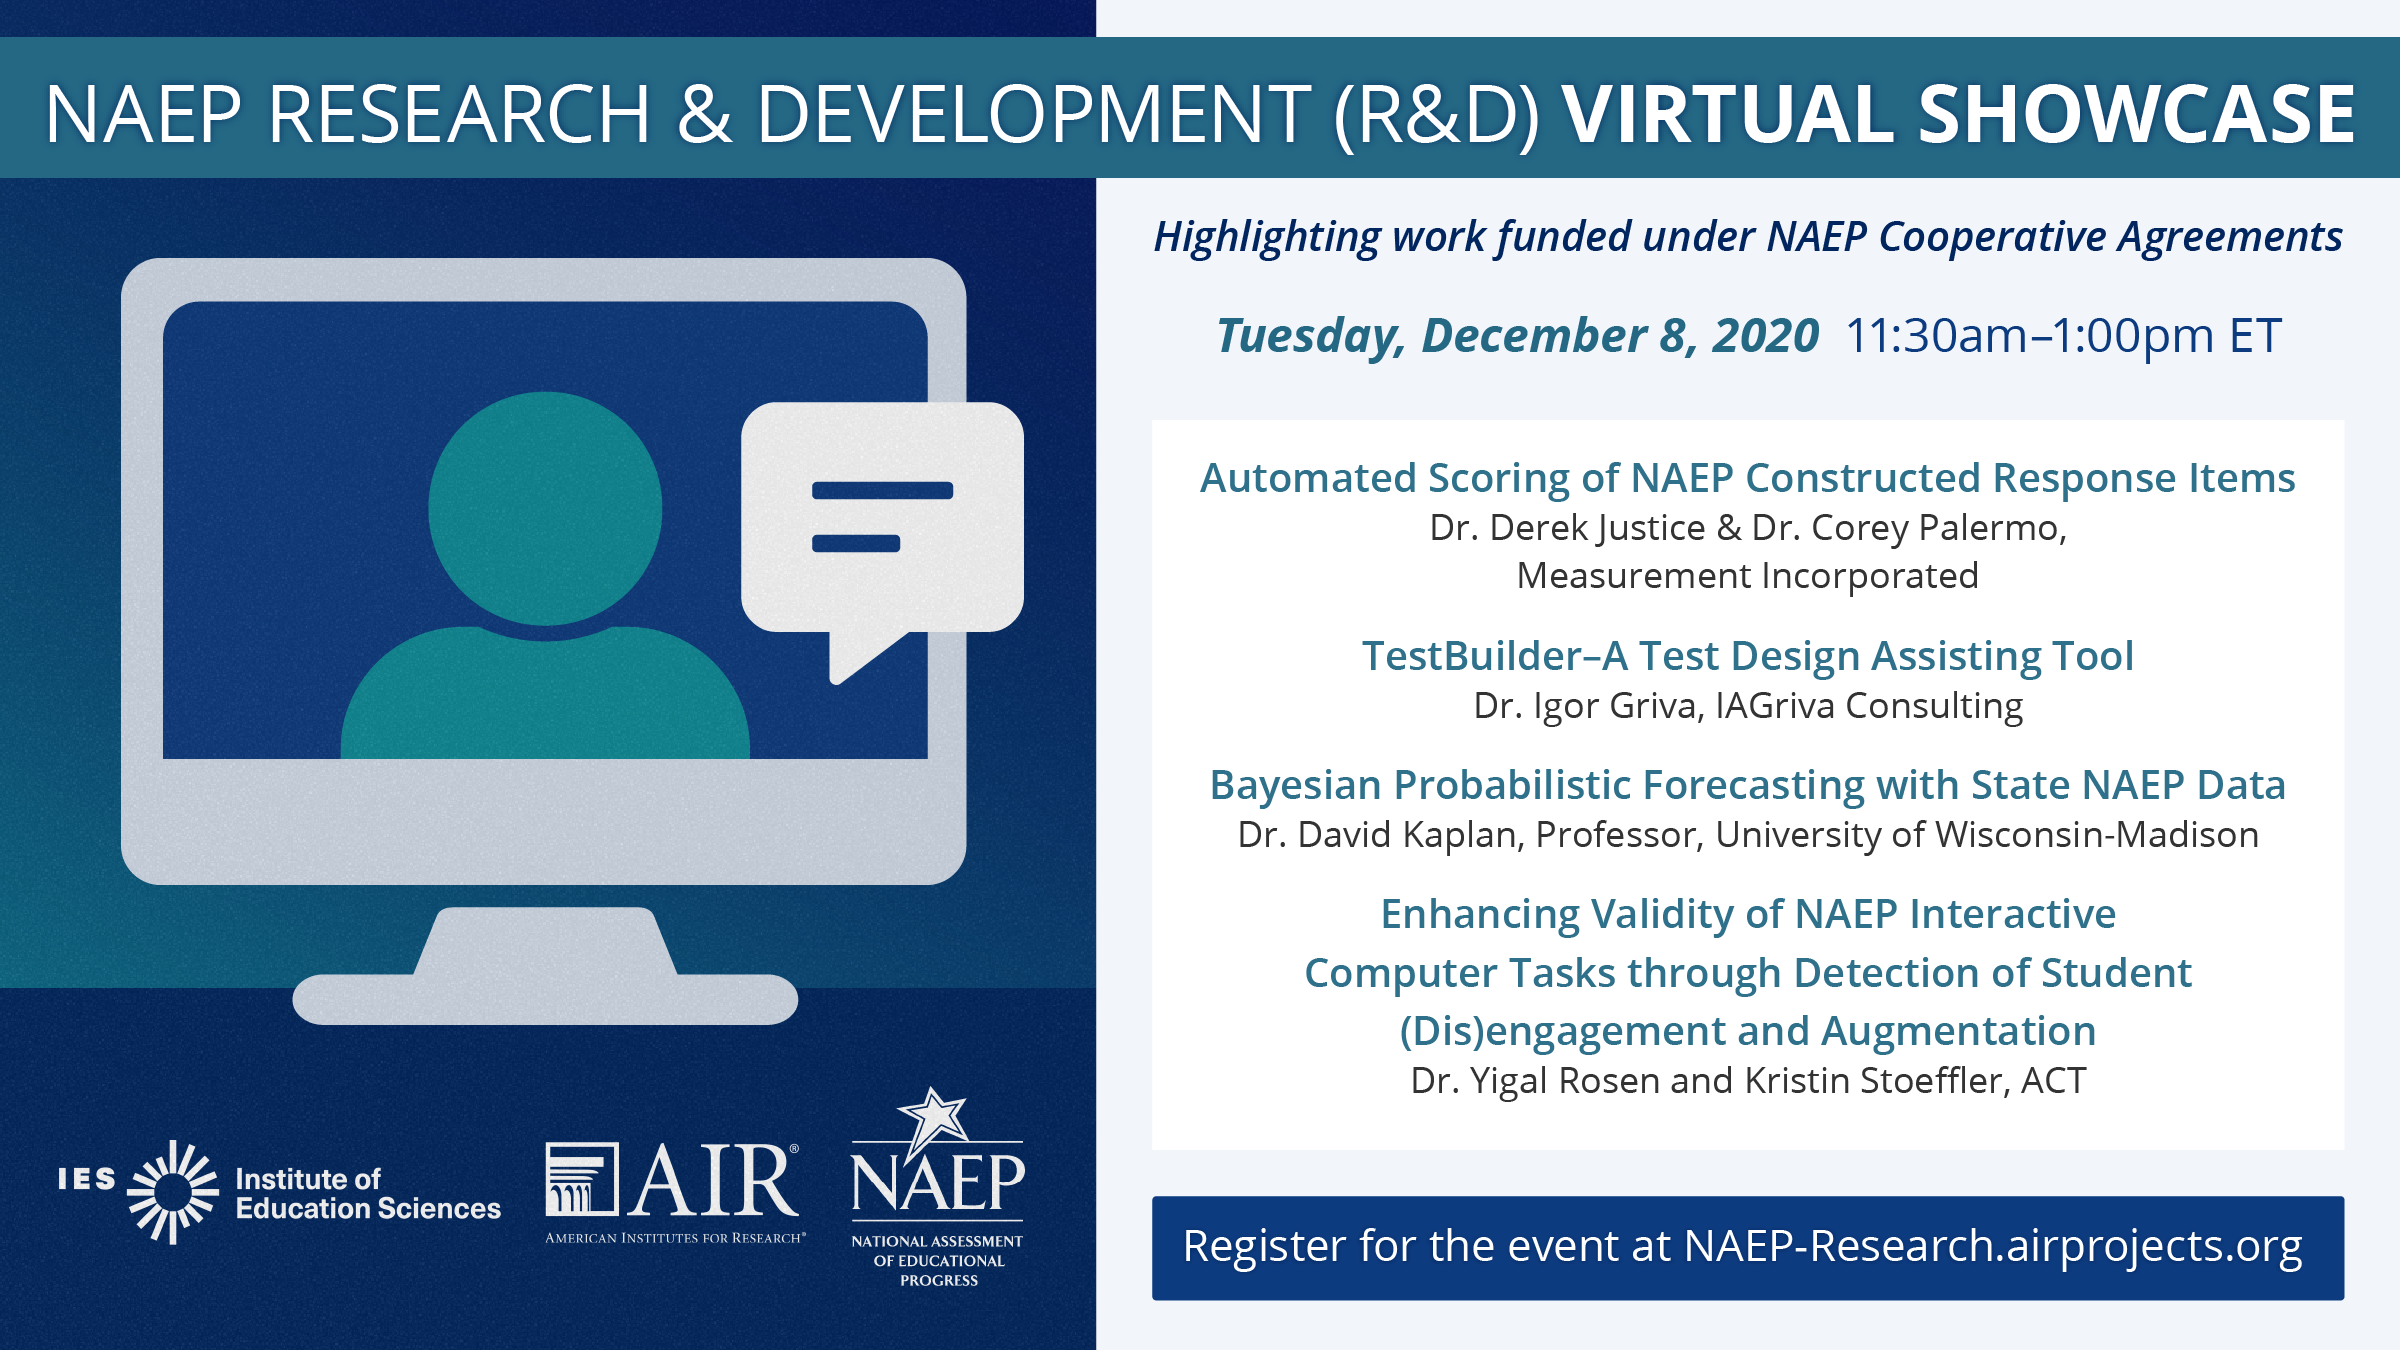 NAEP RD virtual showcase poster.